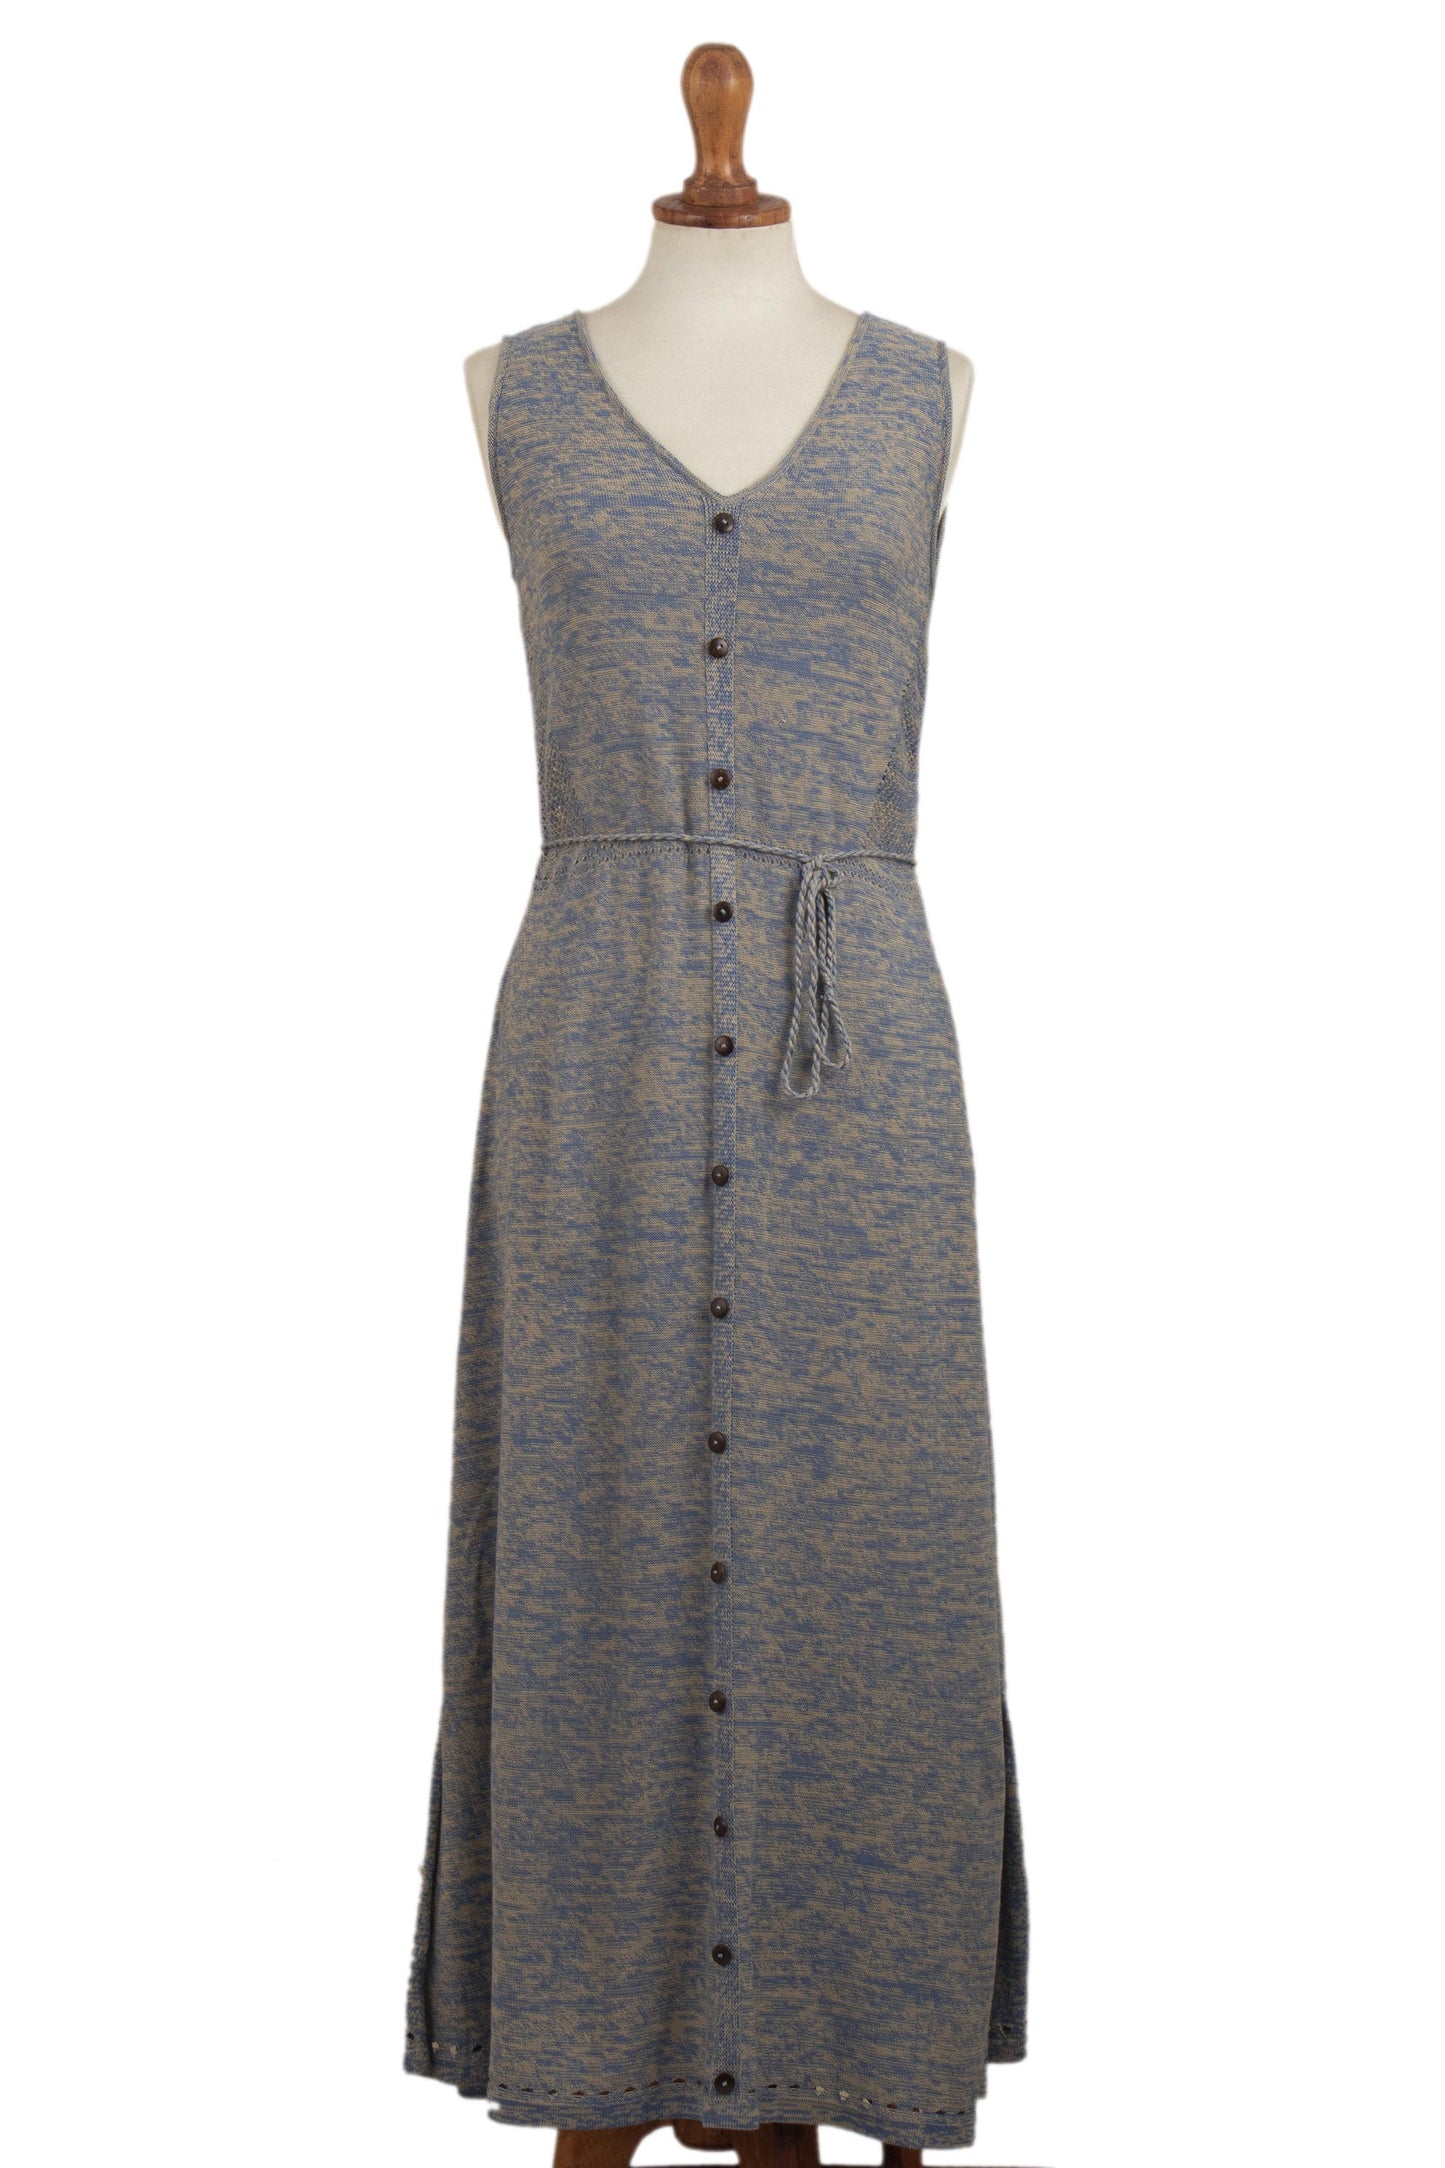 Toqo in Heathered Sky Blue Organic Cotton Buttoned Maxi Dress in Cerulean from Peru